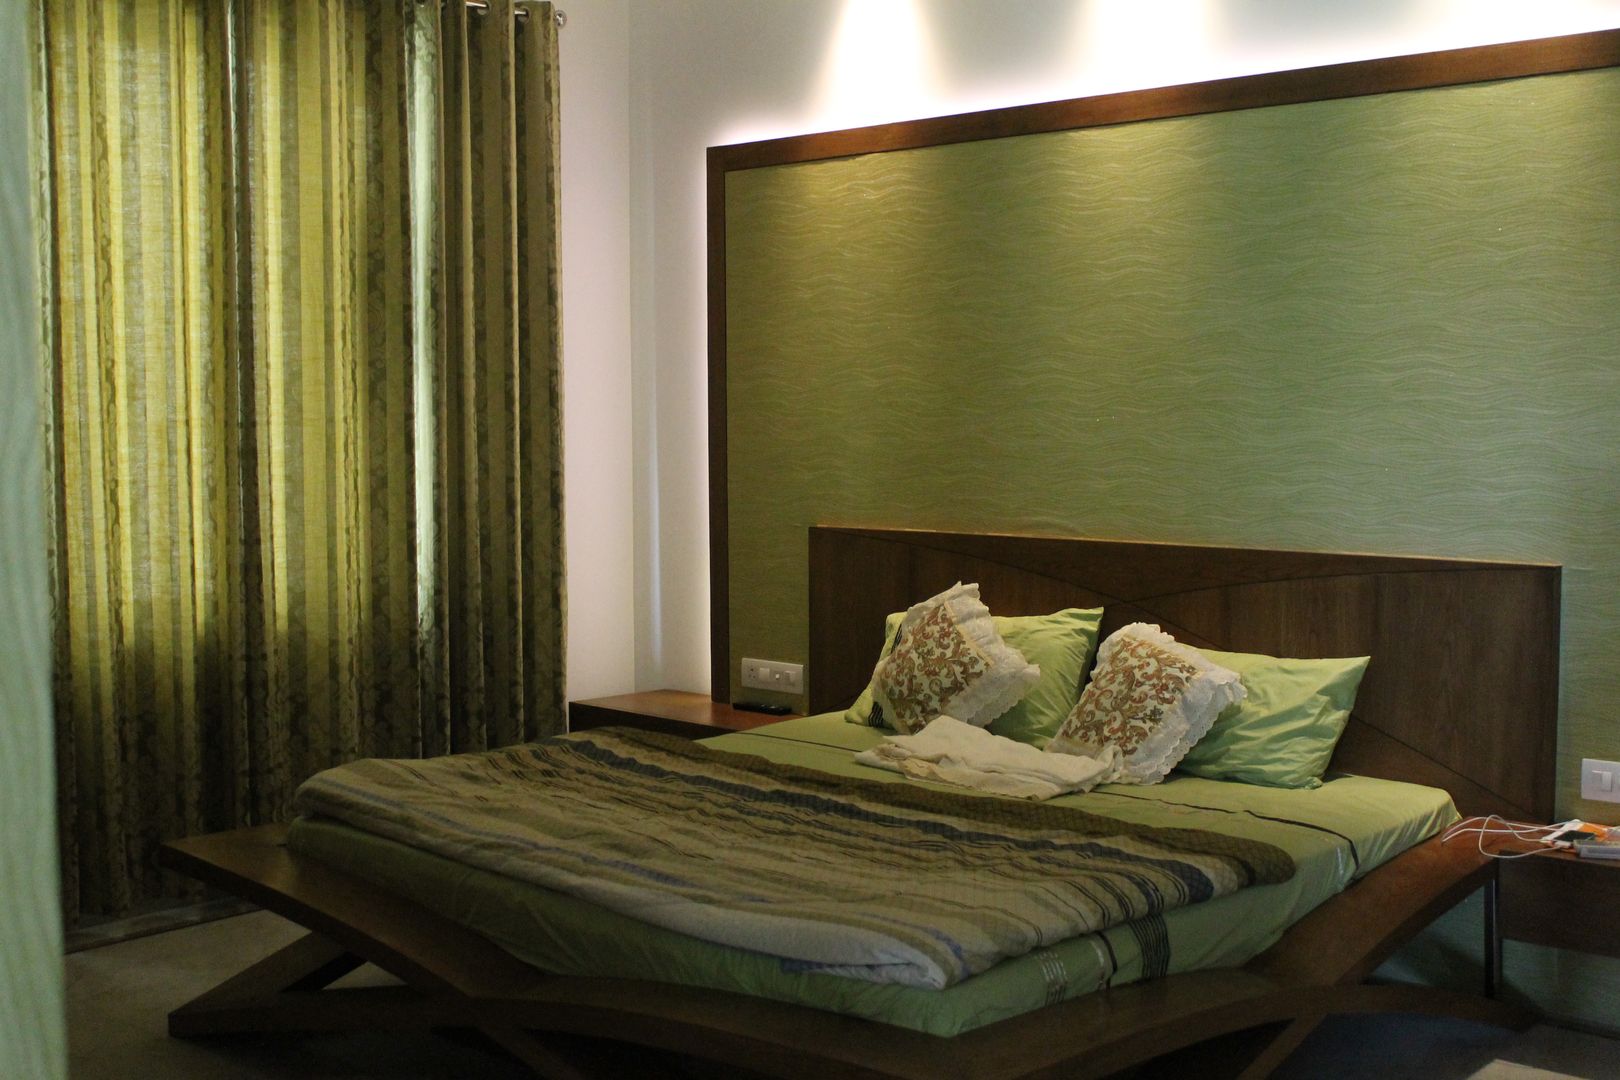 Residential interiors, Ingenious Ingenious Kamar Tidur Modern